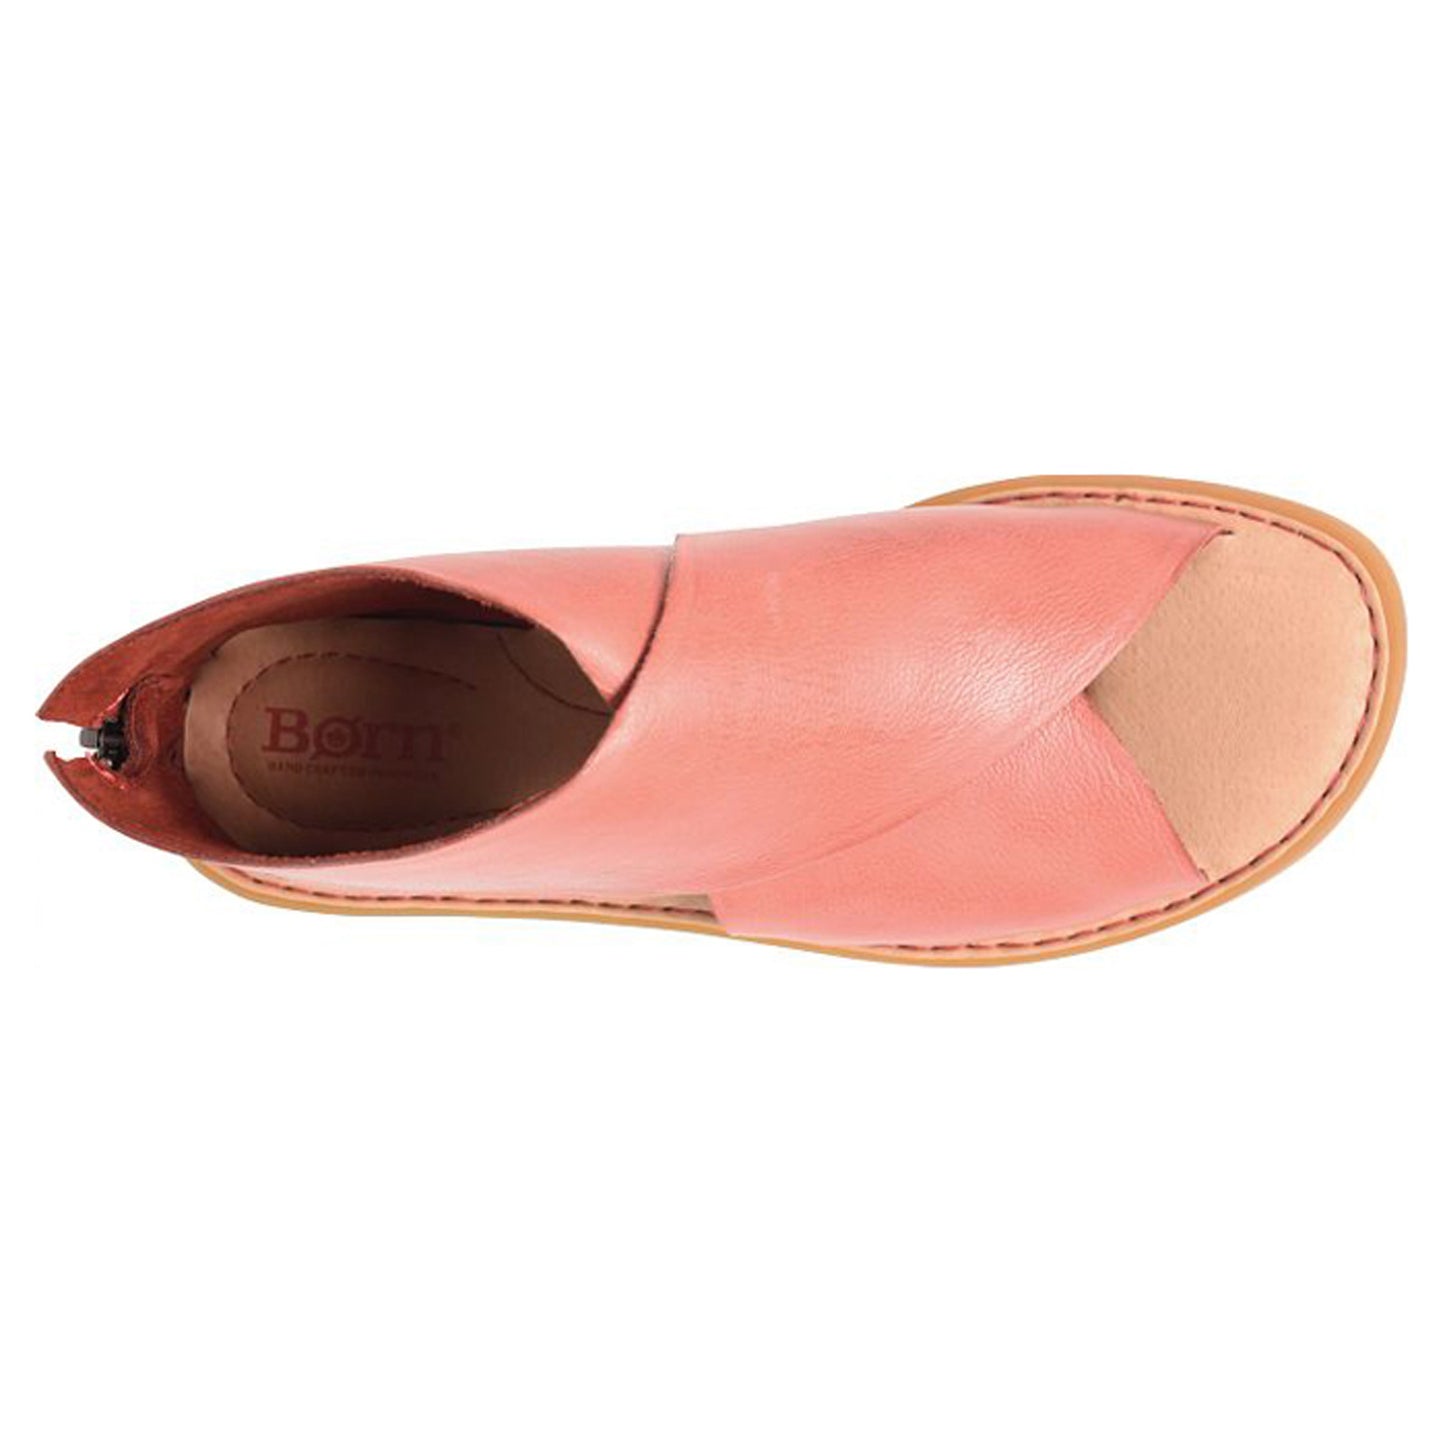 Peltz Shoes  Women's Born Iwa Sandal Rust BR0018426